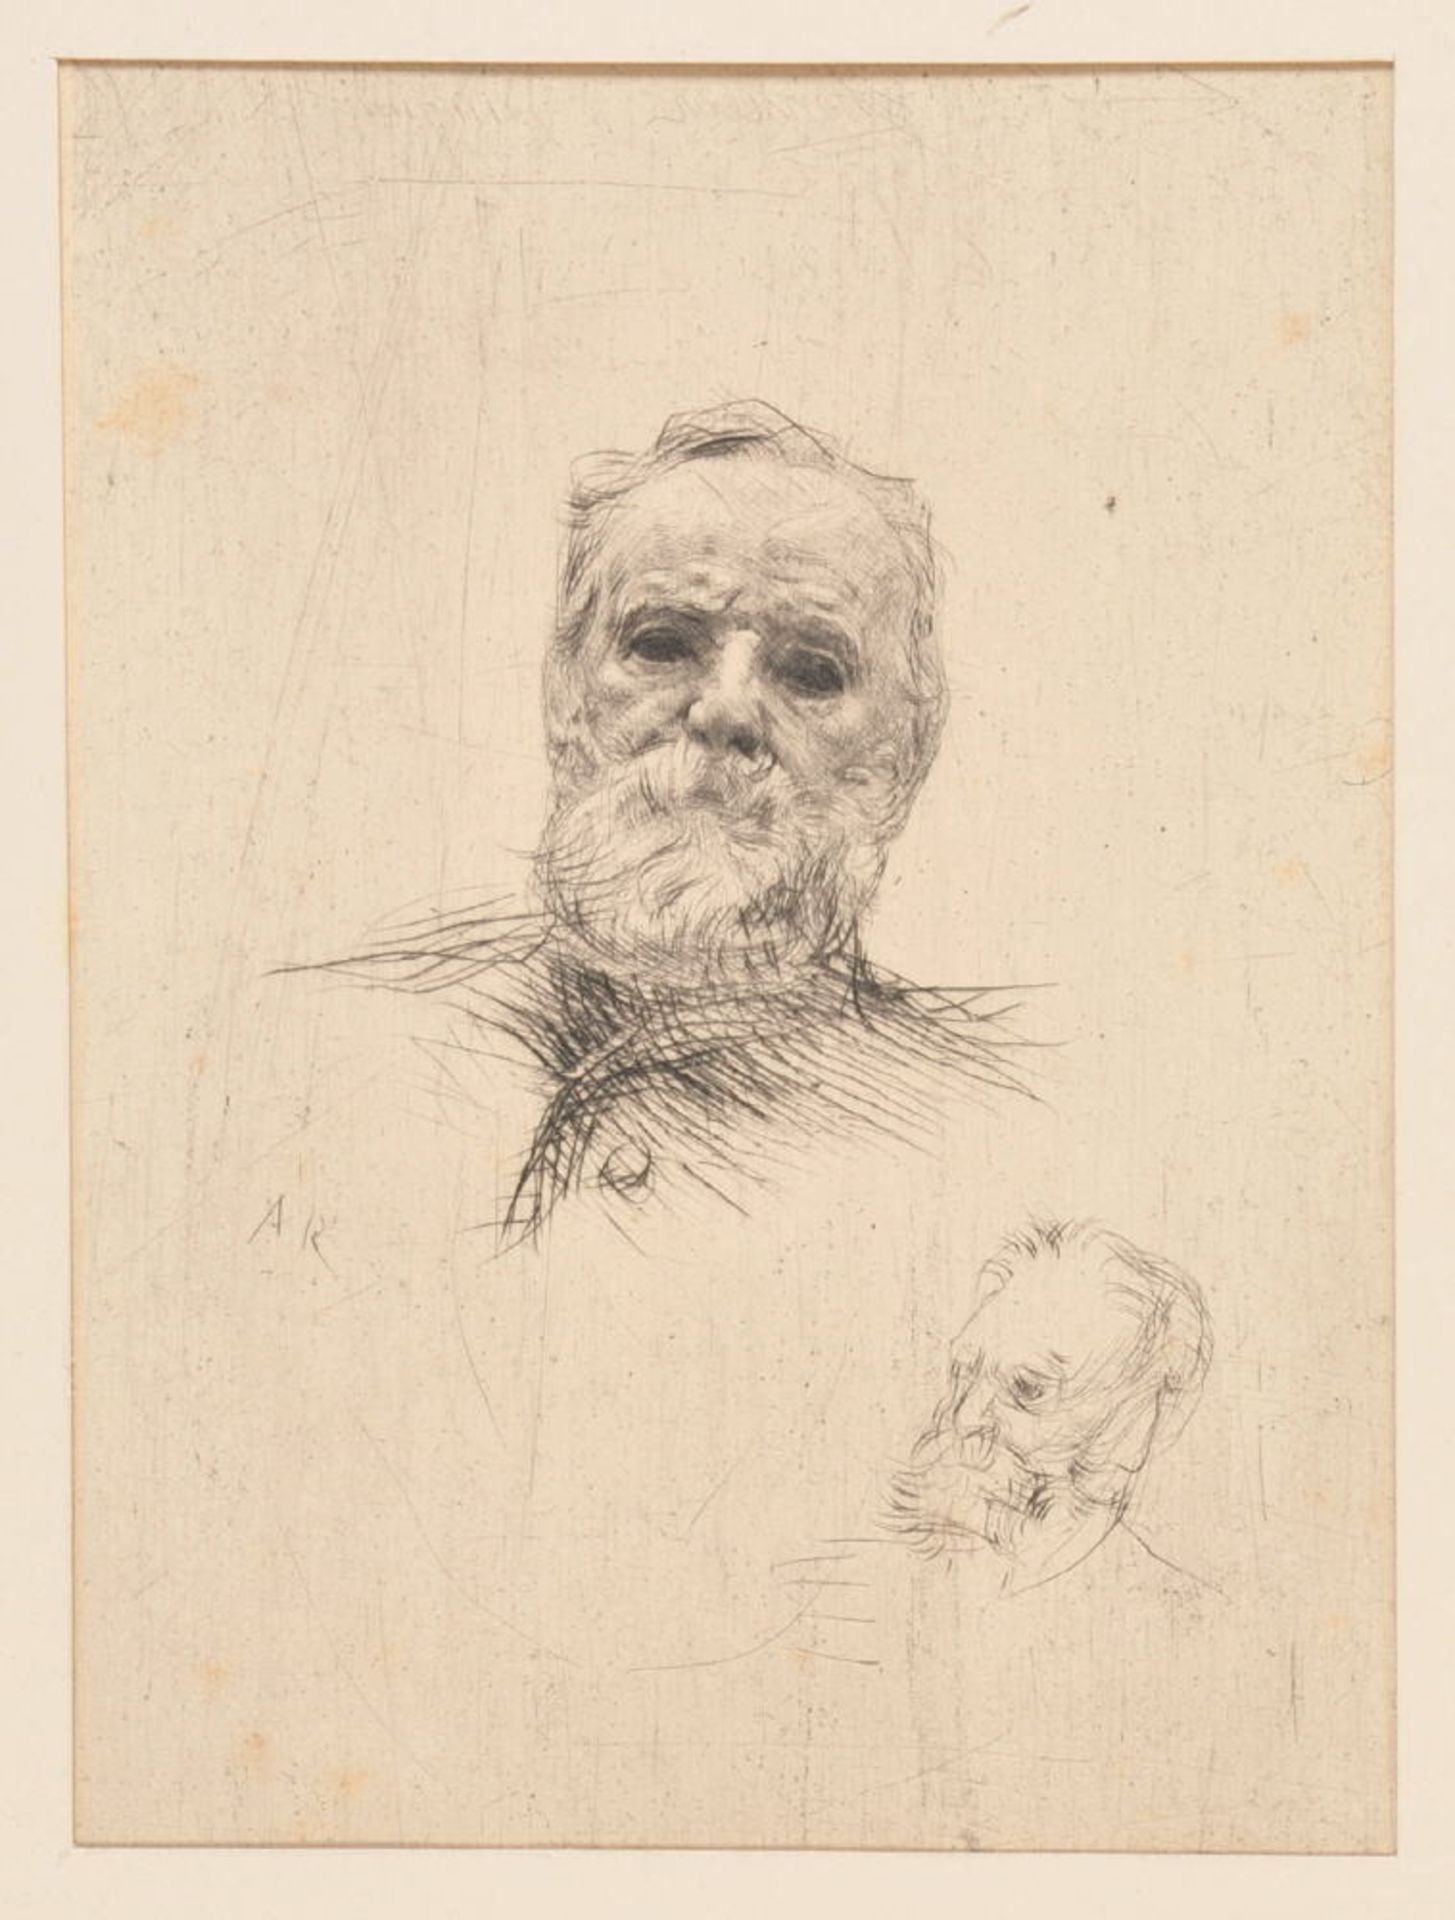 Rodin, Auguste, 1840 Paris - 1917 MeudonRadierung, 18,5 x 13,5 cm, " Victor Hugo en face ", i.d.